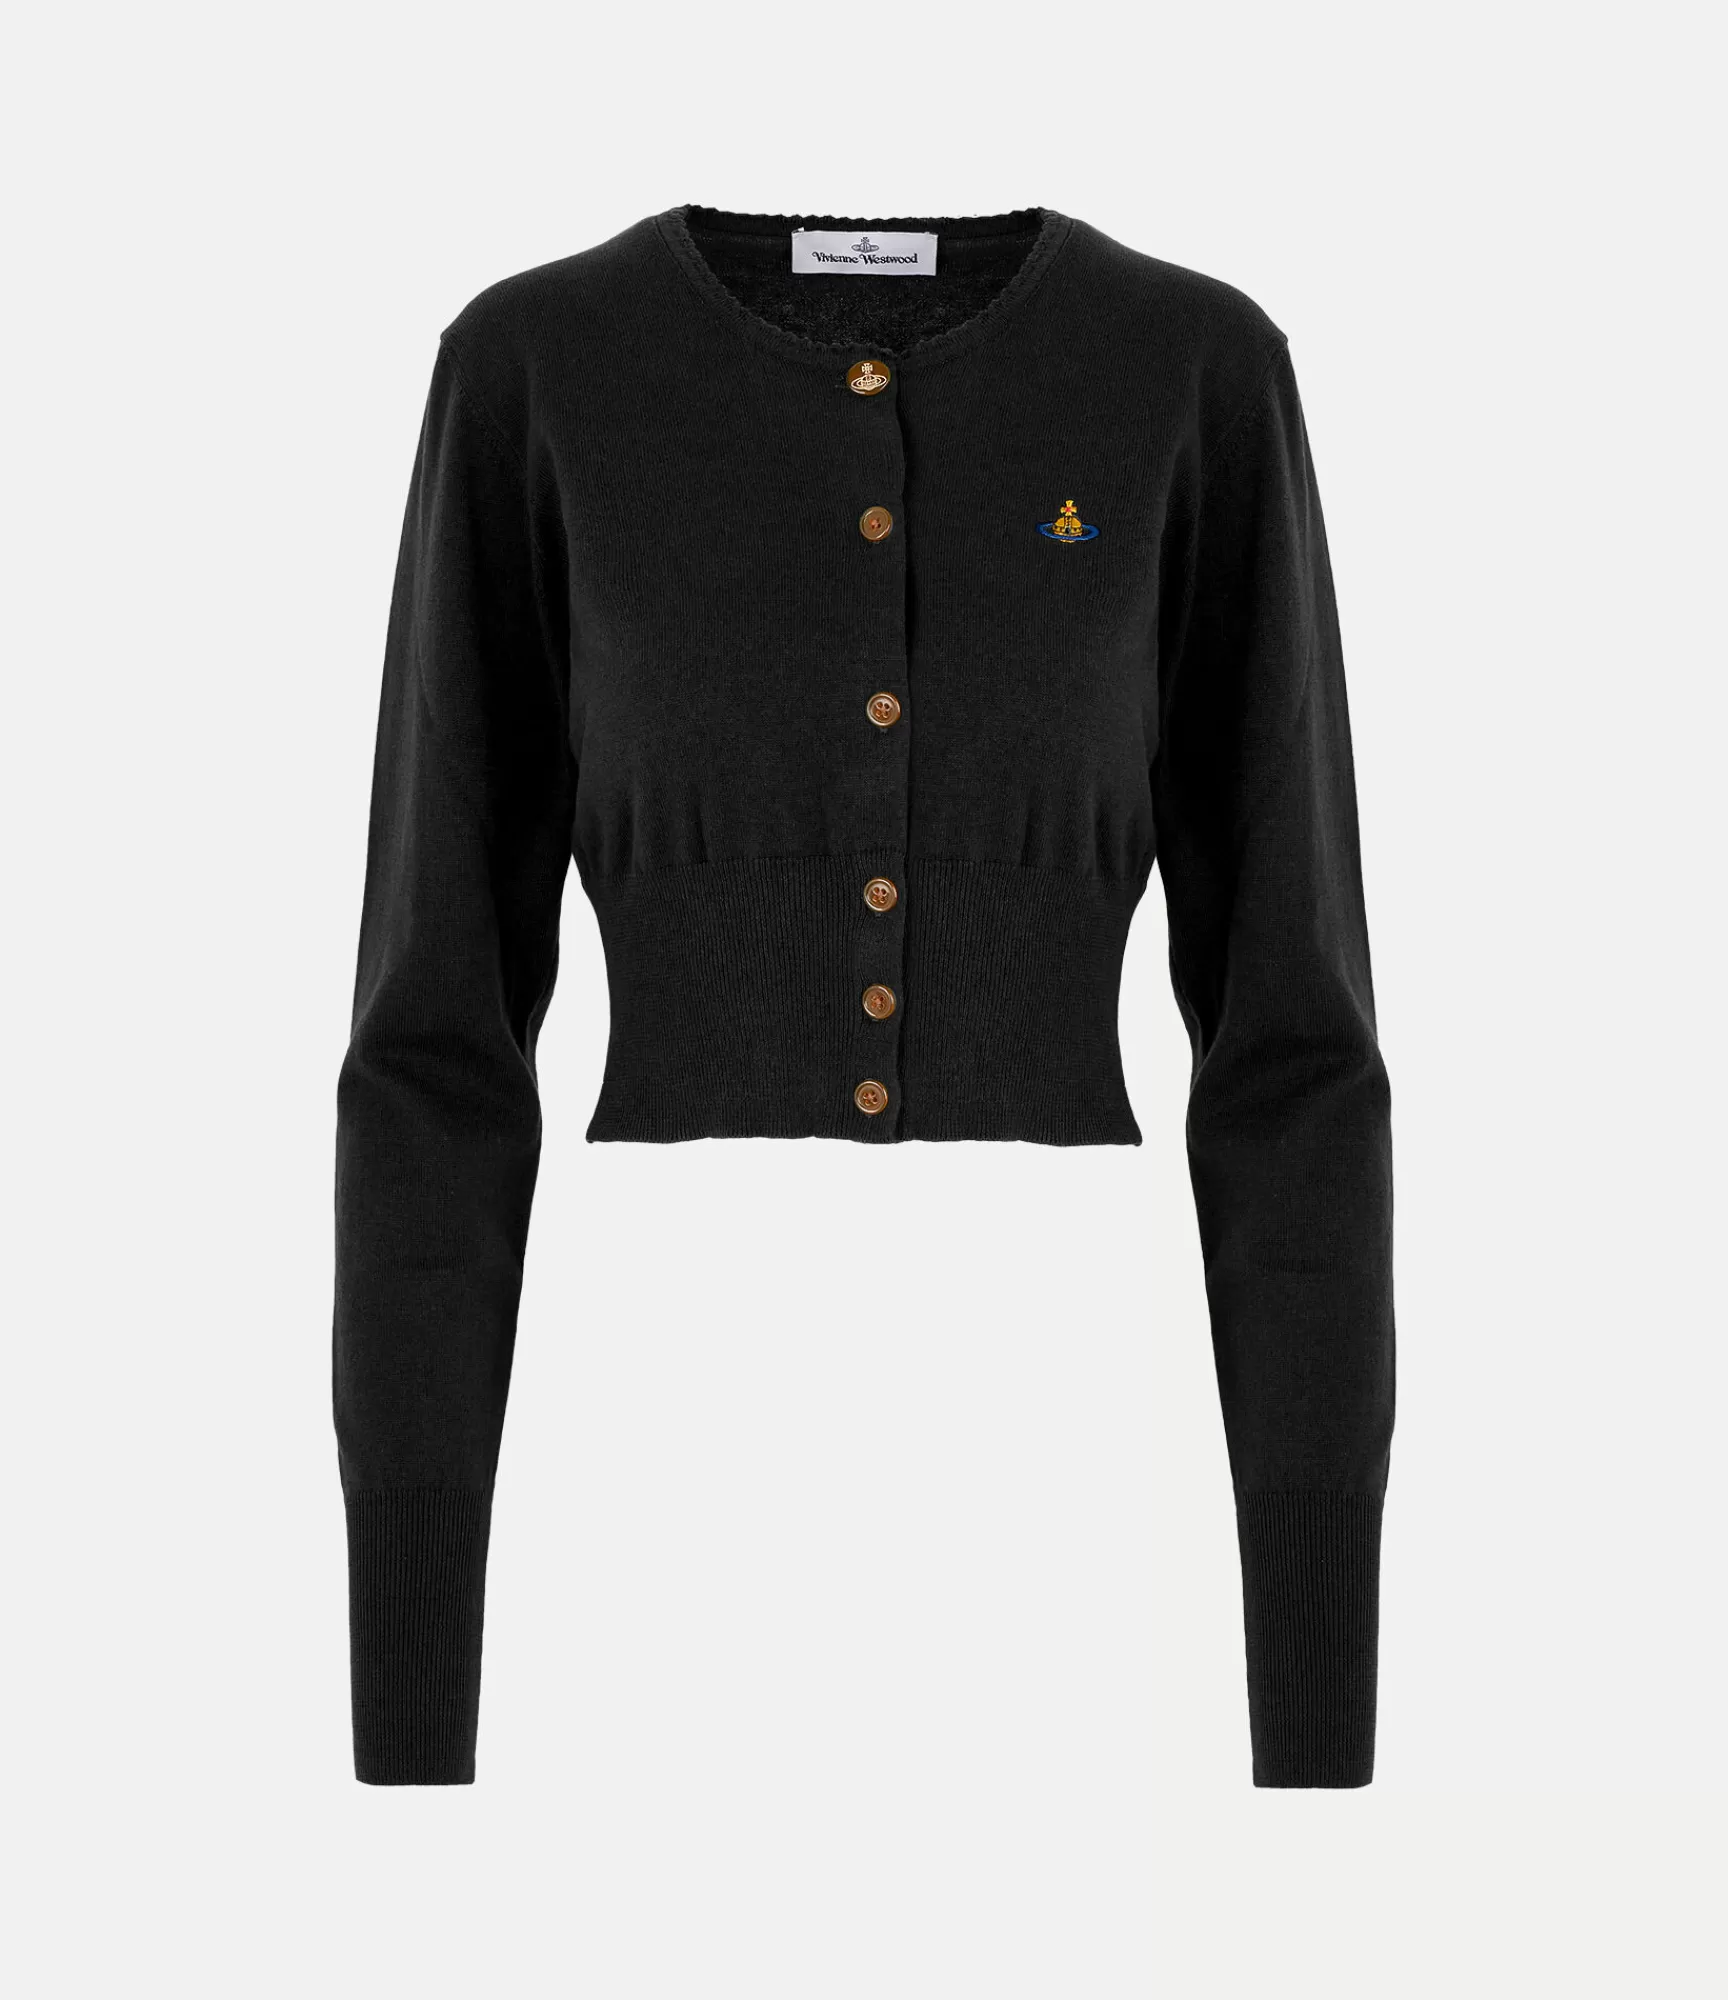 Vivienne Westwood Knitwear*Bea cropped cardi Black